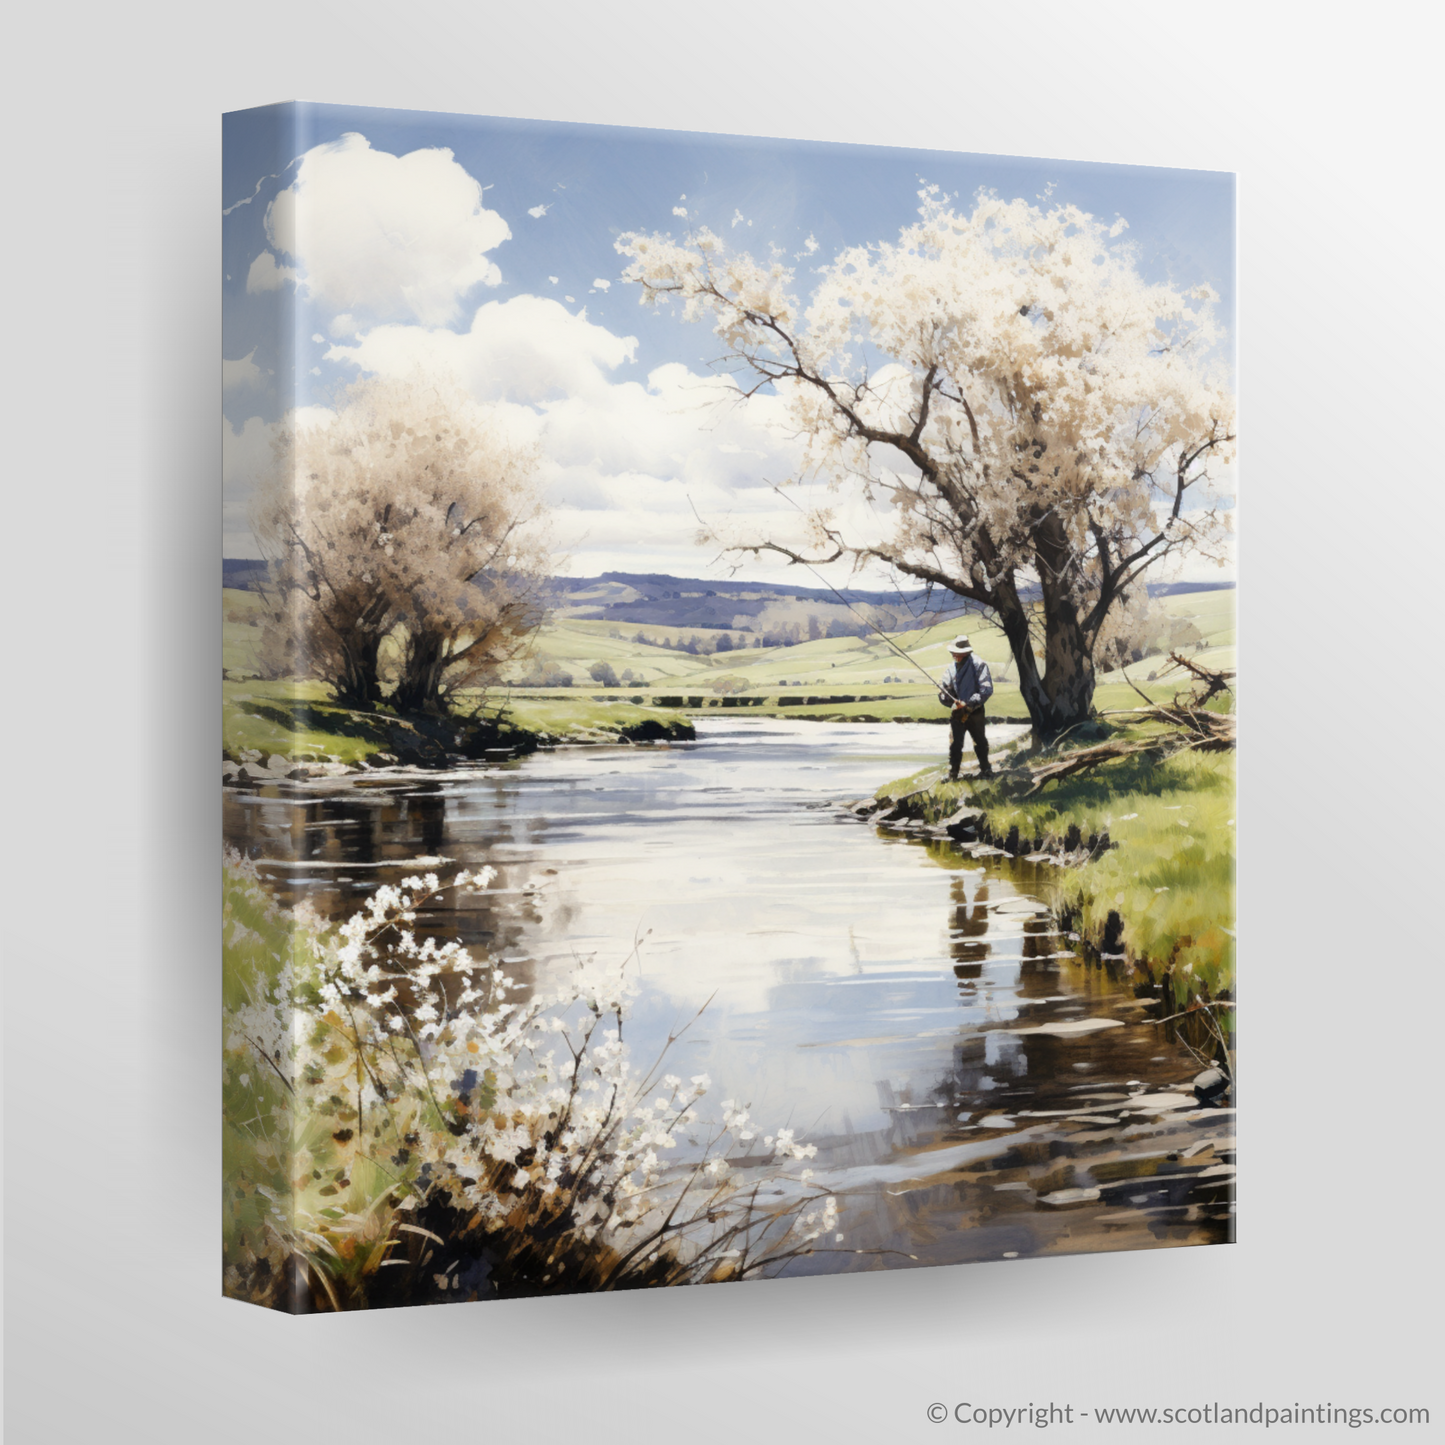 The River Spey Angler: A Spring Symphony